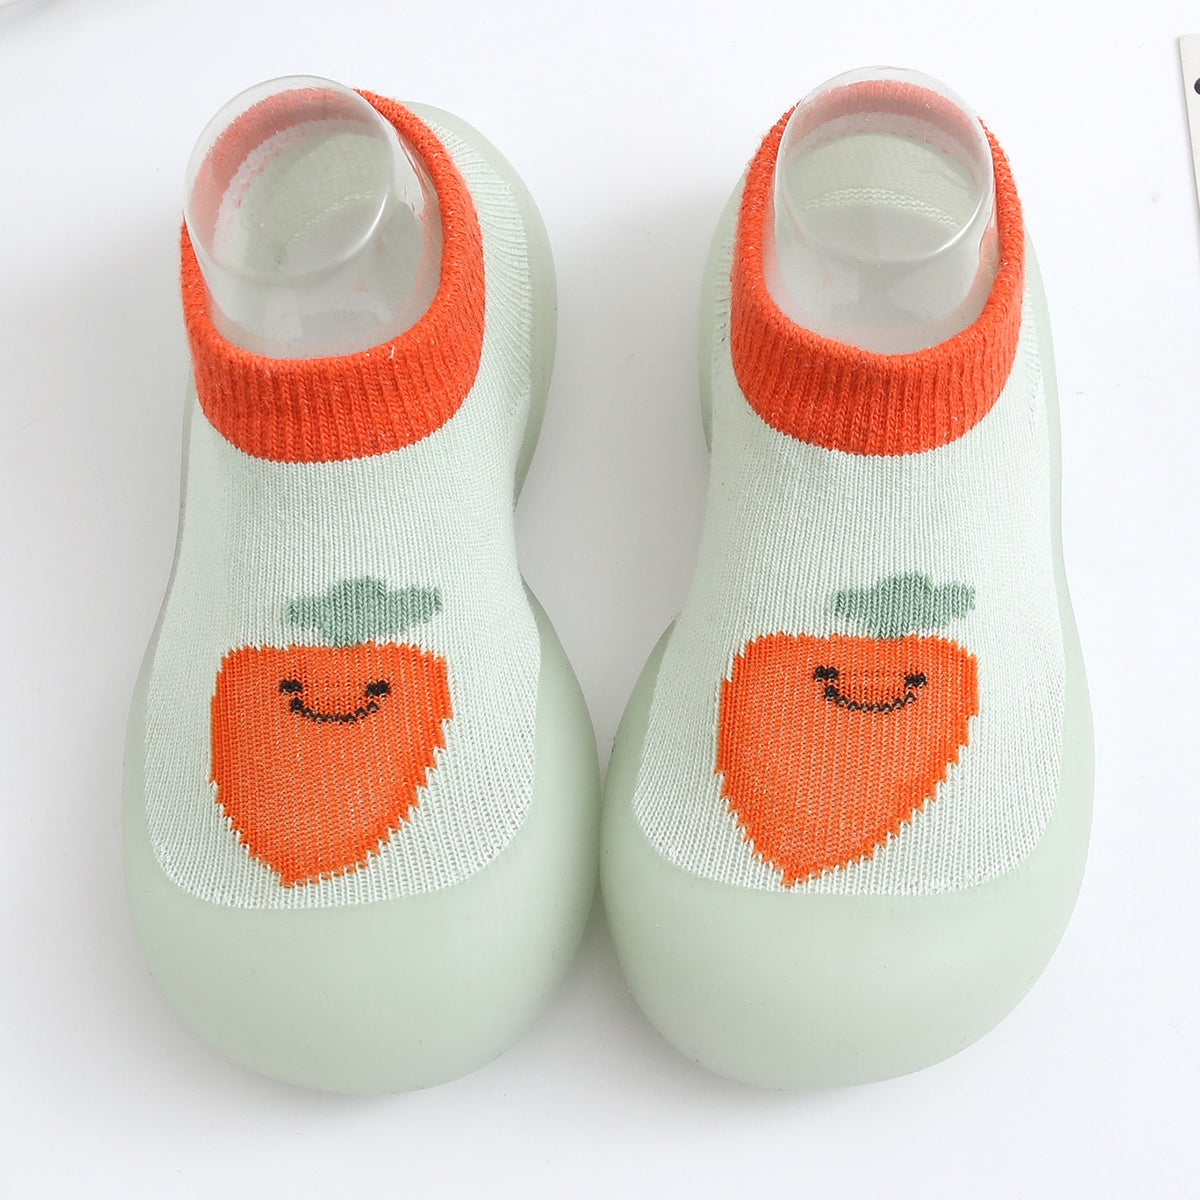 Baby Socks Shoes/ Cotton Breathable Lightweight Slip-on Sneak